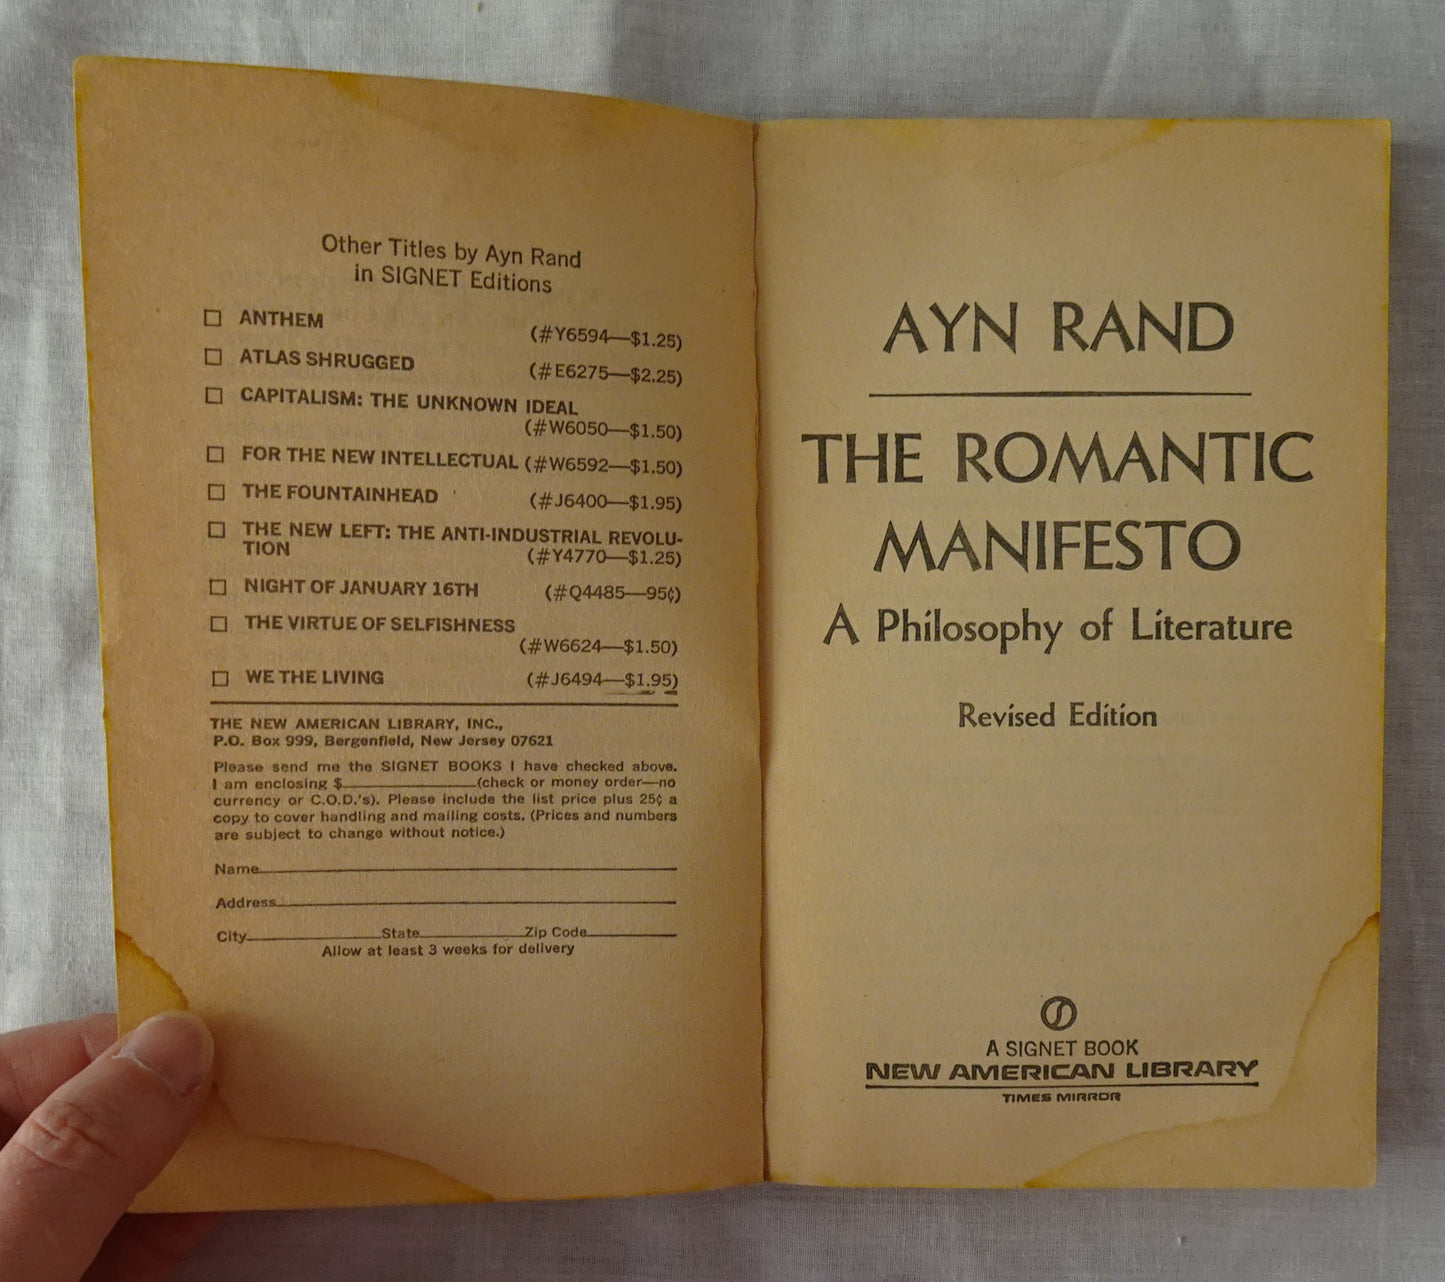 The Romantic Manifesto by Ayn Rand